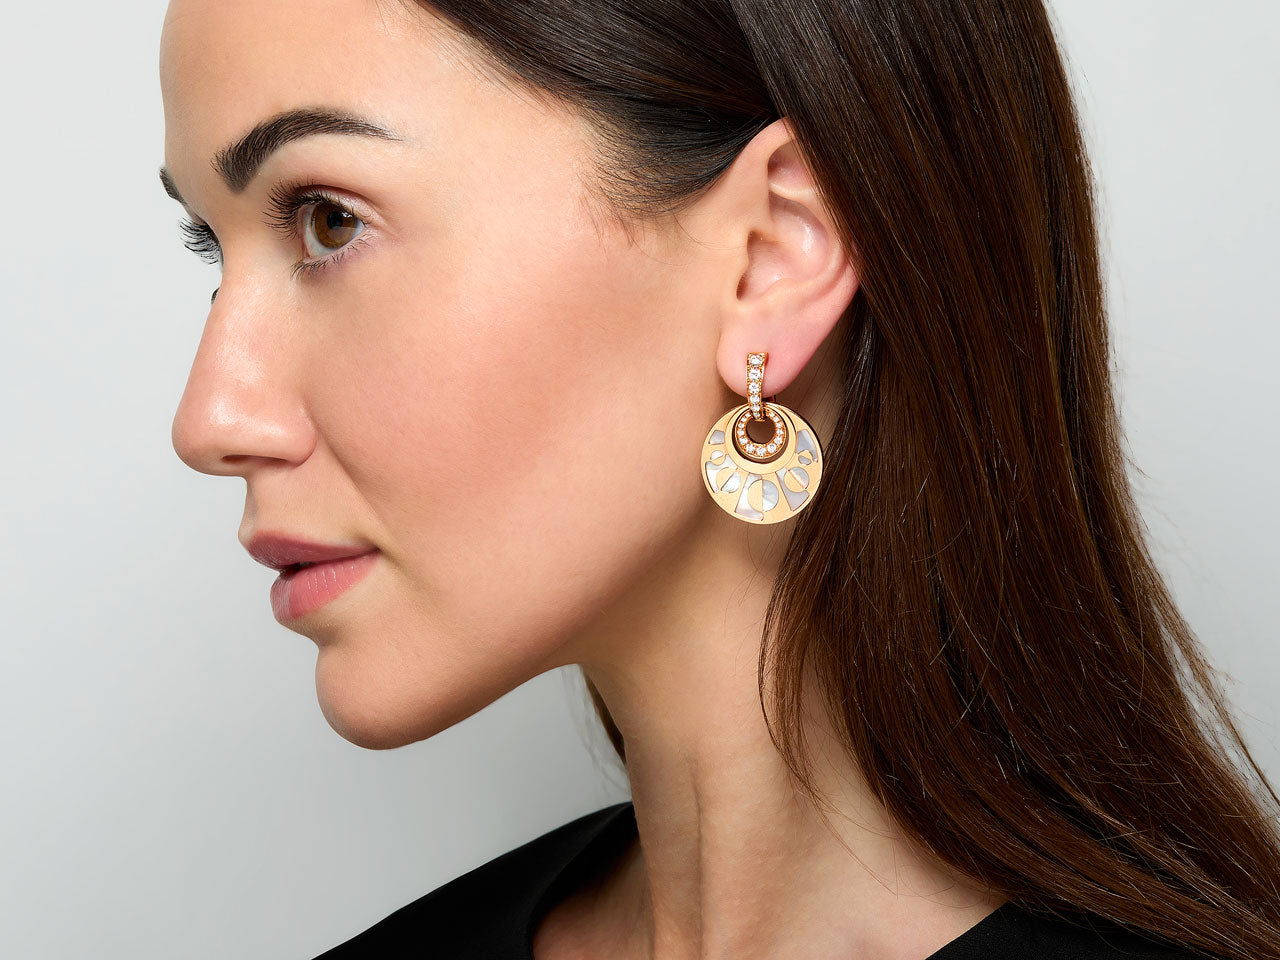 Bulgari 'Intarsio' Diamond and Mother of Pearl Earrings in 18K Rose Gold